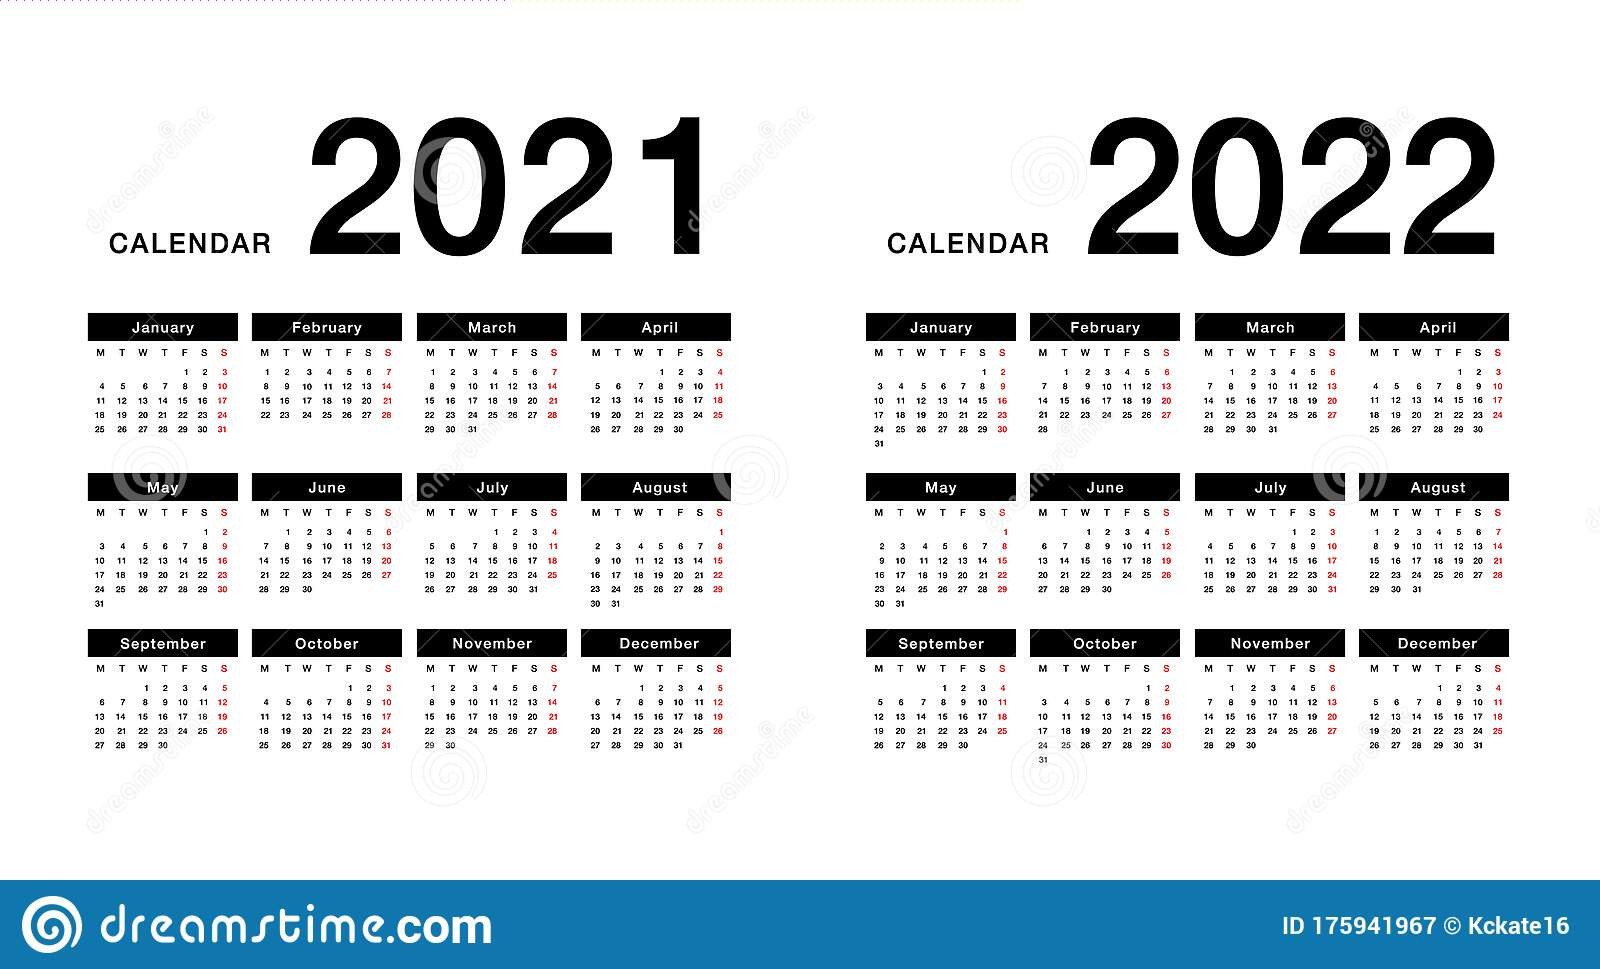 Calendar 2022 Vector Free Download - Calendar 2022  Calendar 2022 Vector Free Download